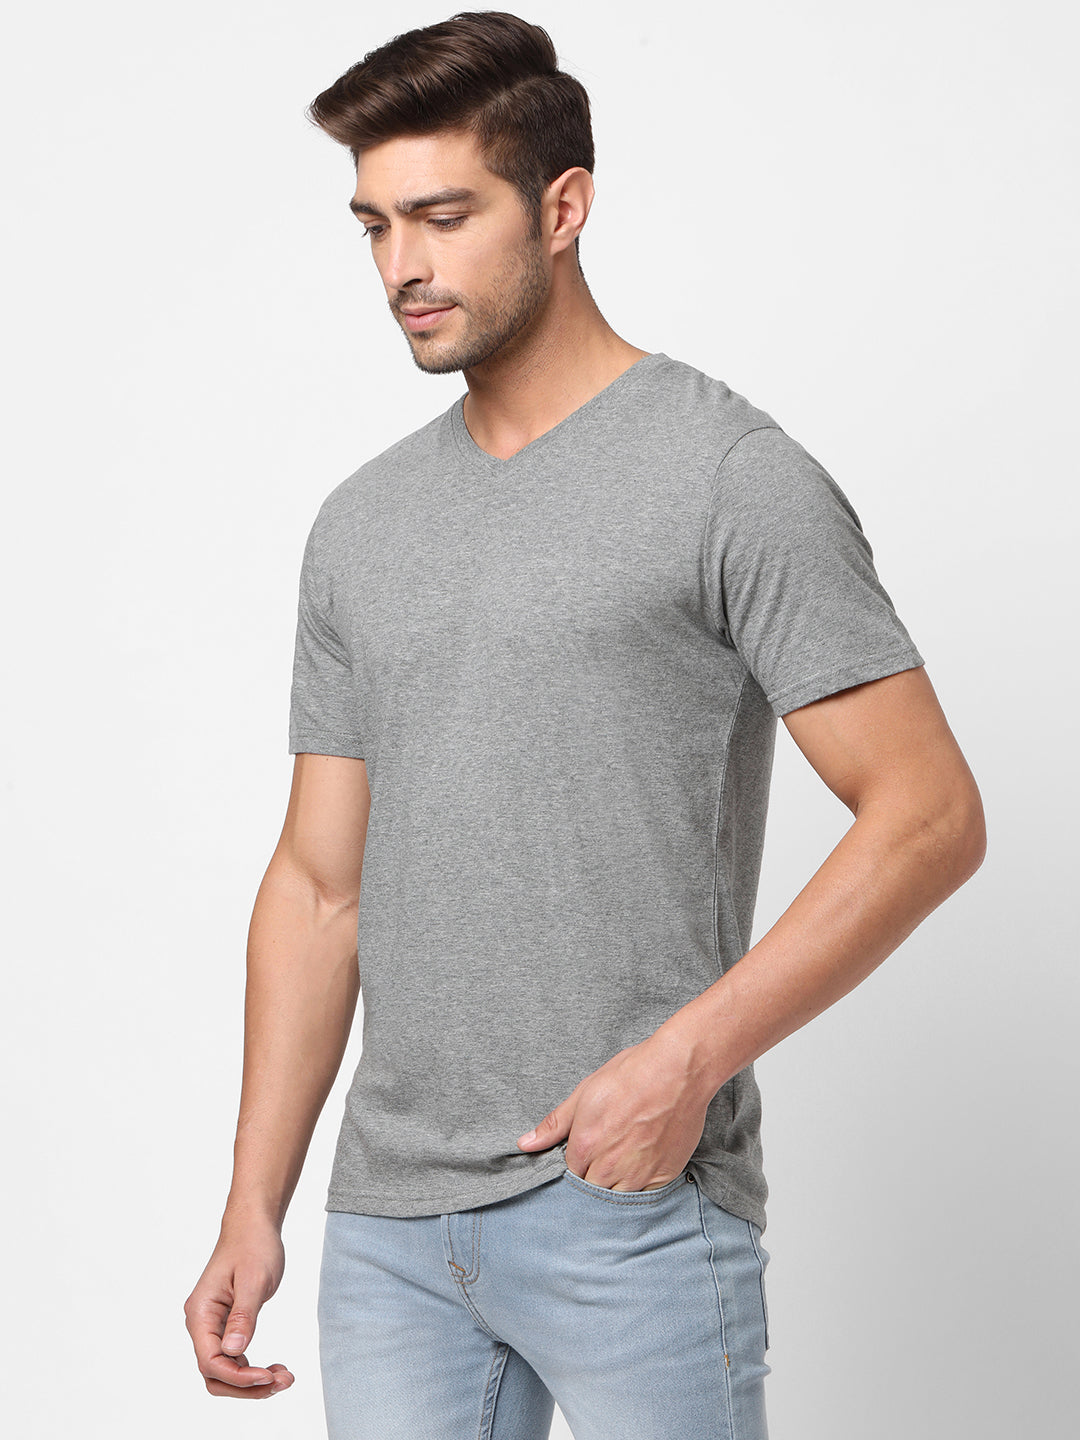 Vintage Men's T-Shirt - Grey - M